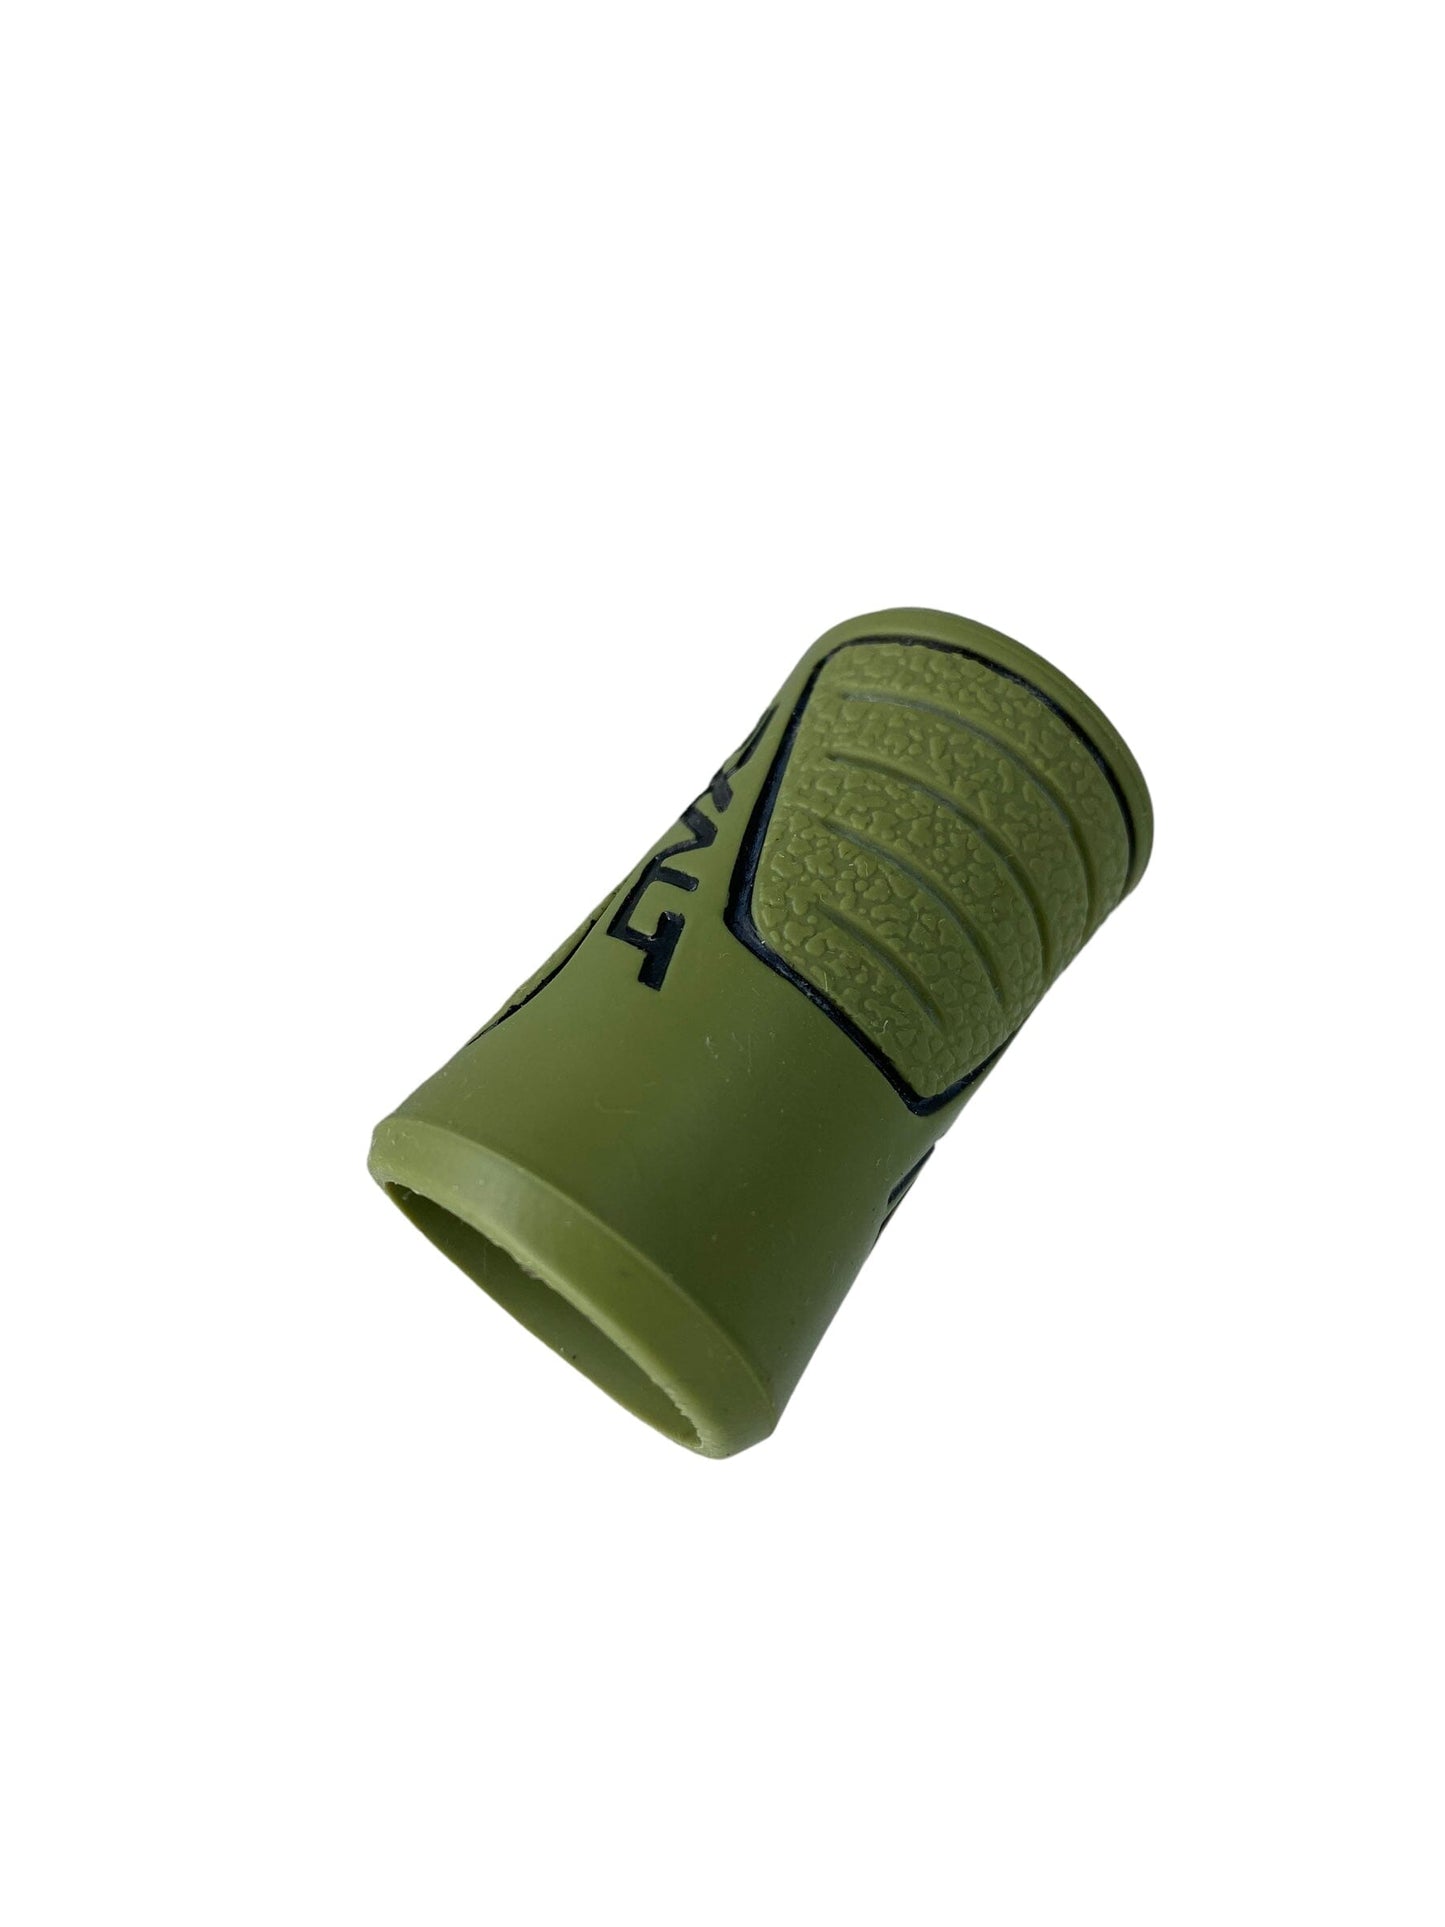 Used Exalt Regulator Grip - Army Green Paintball Gun from CPXBrosPaintball Buy/Sell/Trade Paintball Markers, New Paintball Guns, Paintball Hoppers, Paintball Masks, and Hormesis Headbands